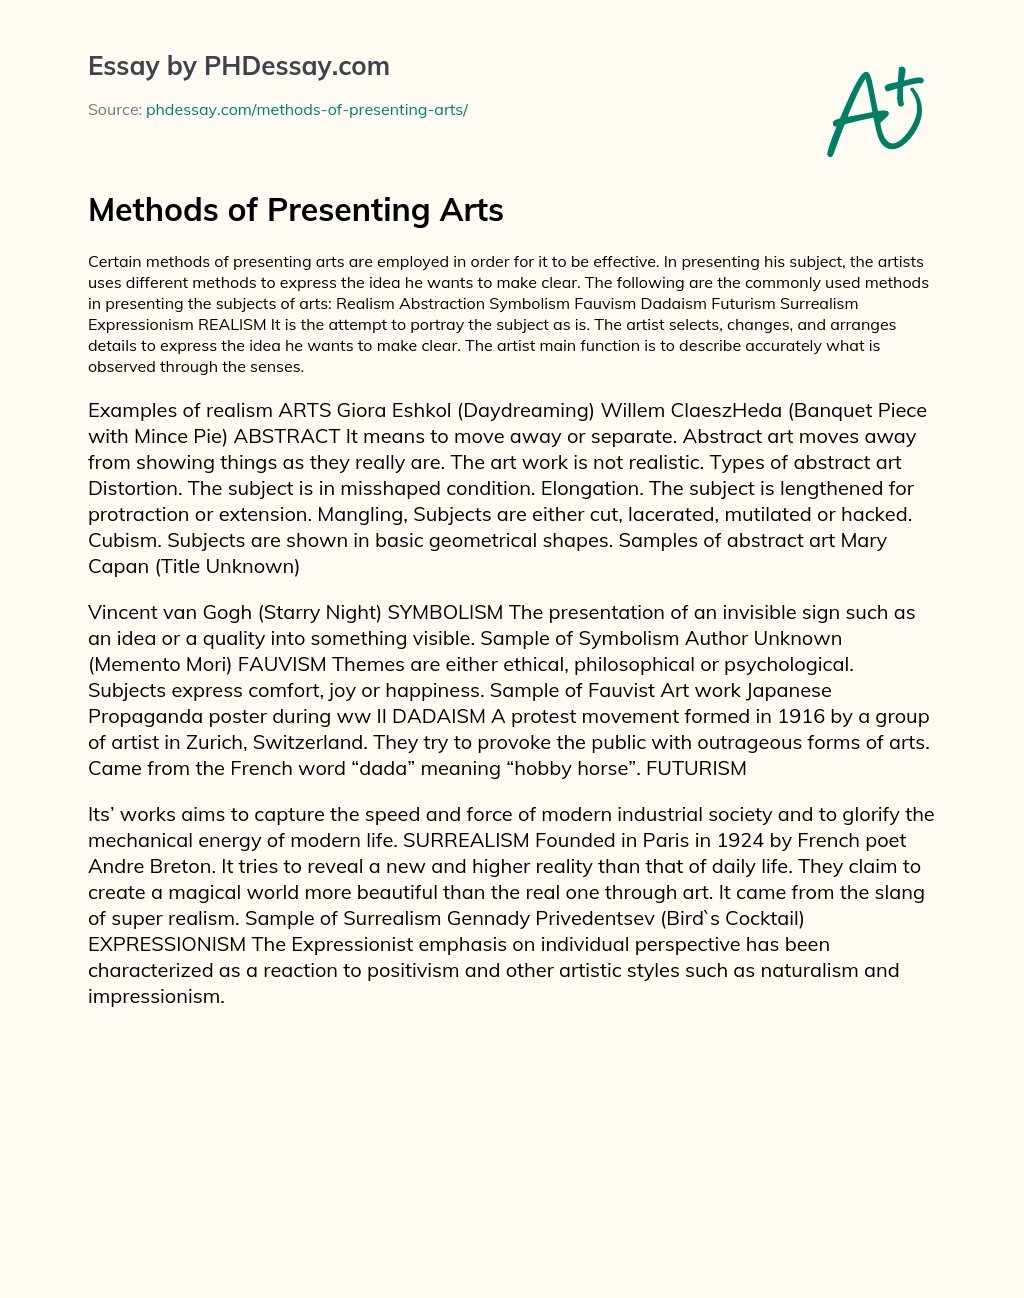 Methods of Presenting Arts essay